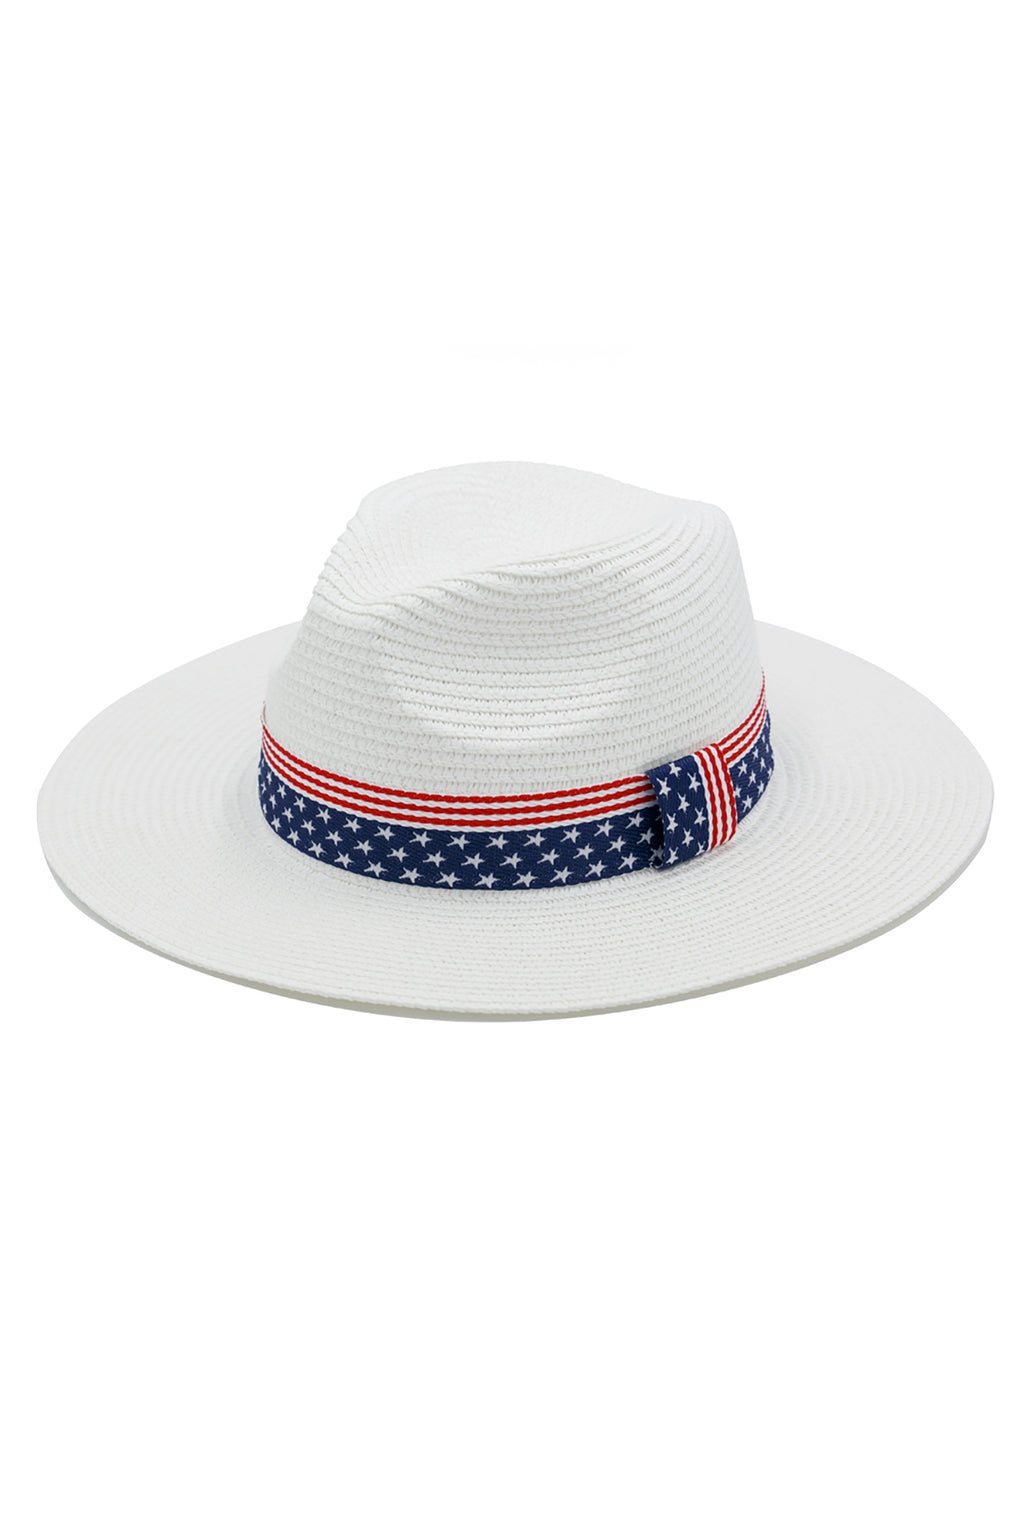 American Flag Sun Hat White - Pack of 6